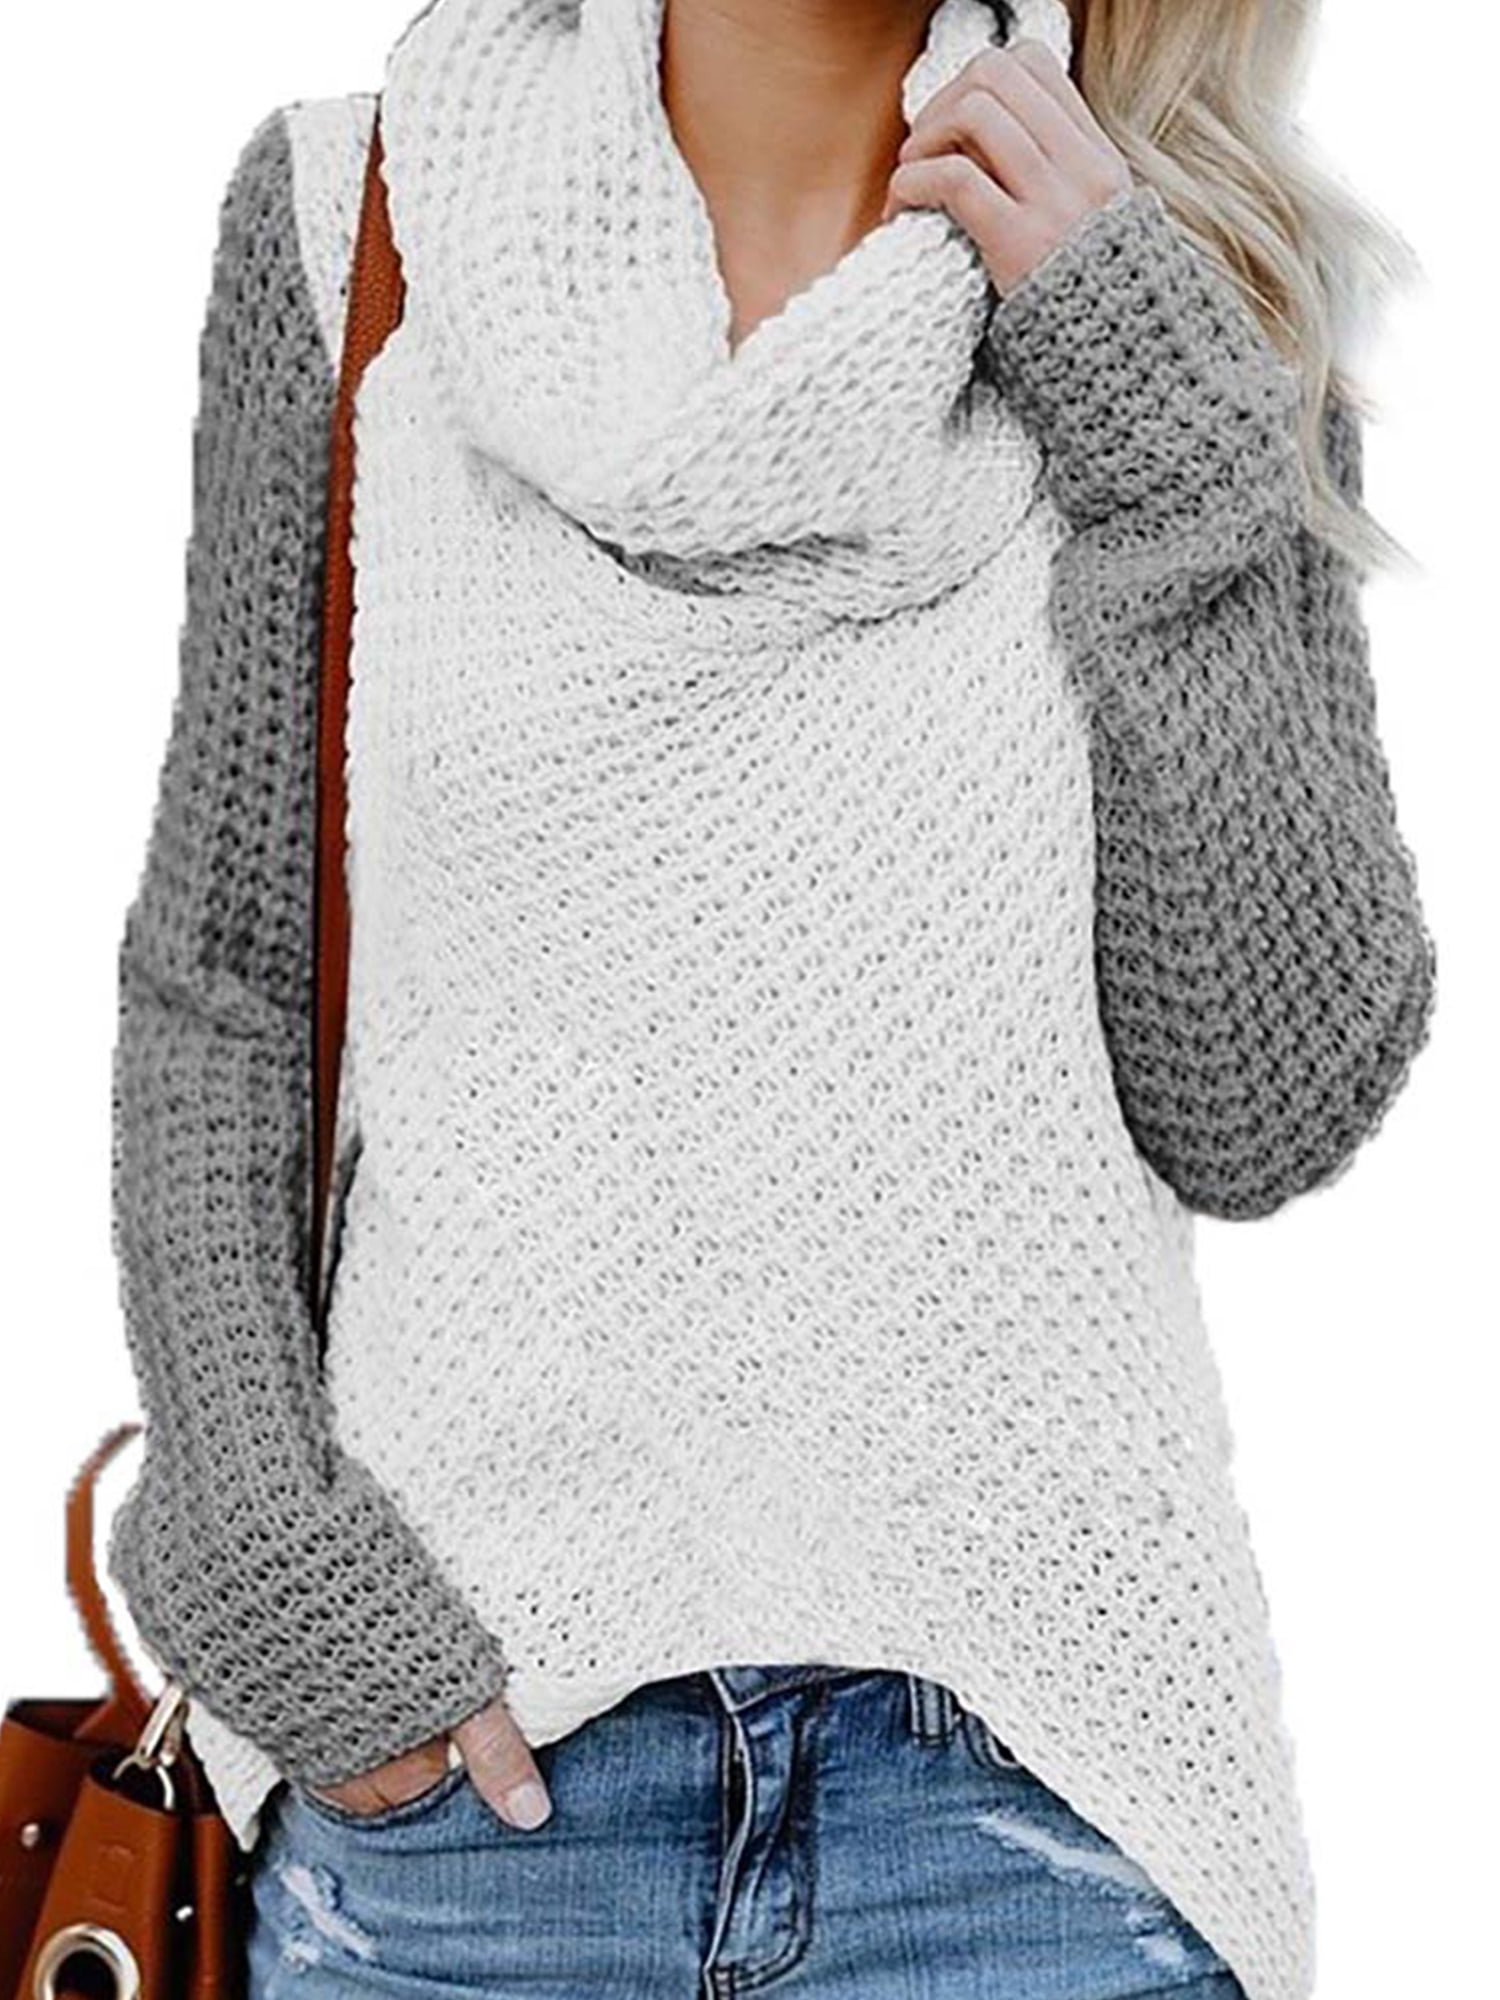 UK Women Cowl Collar Plain  Knitted Winter Warm Sweater Jumper Pullover Top Plus 